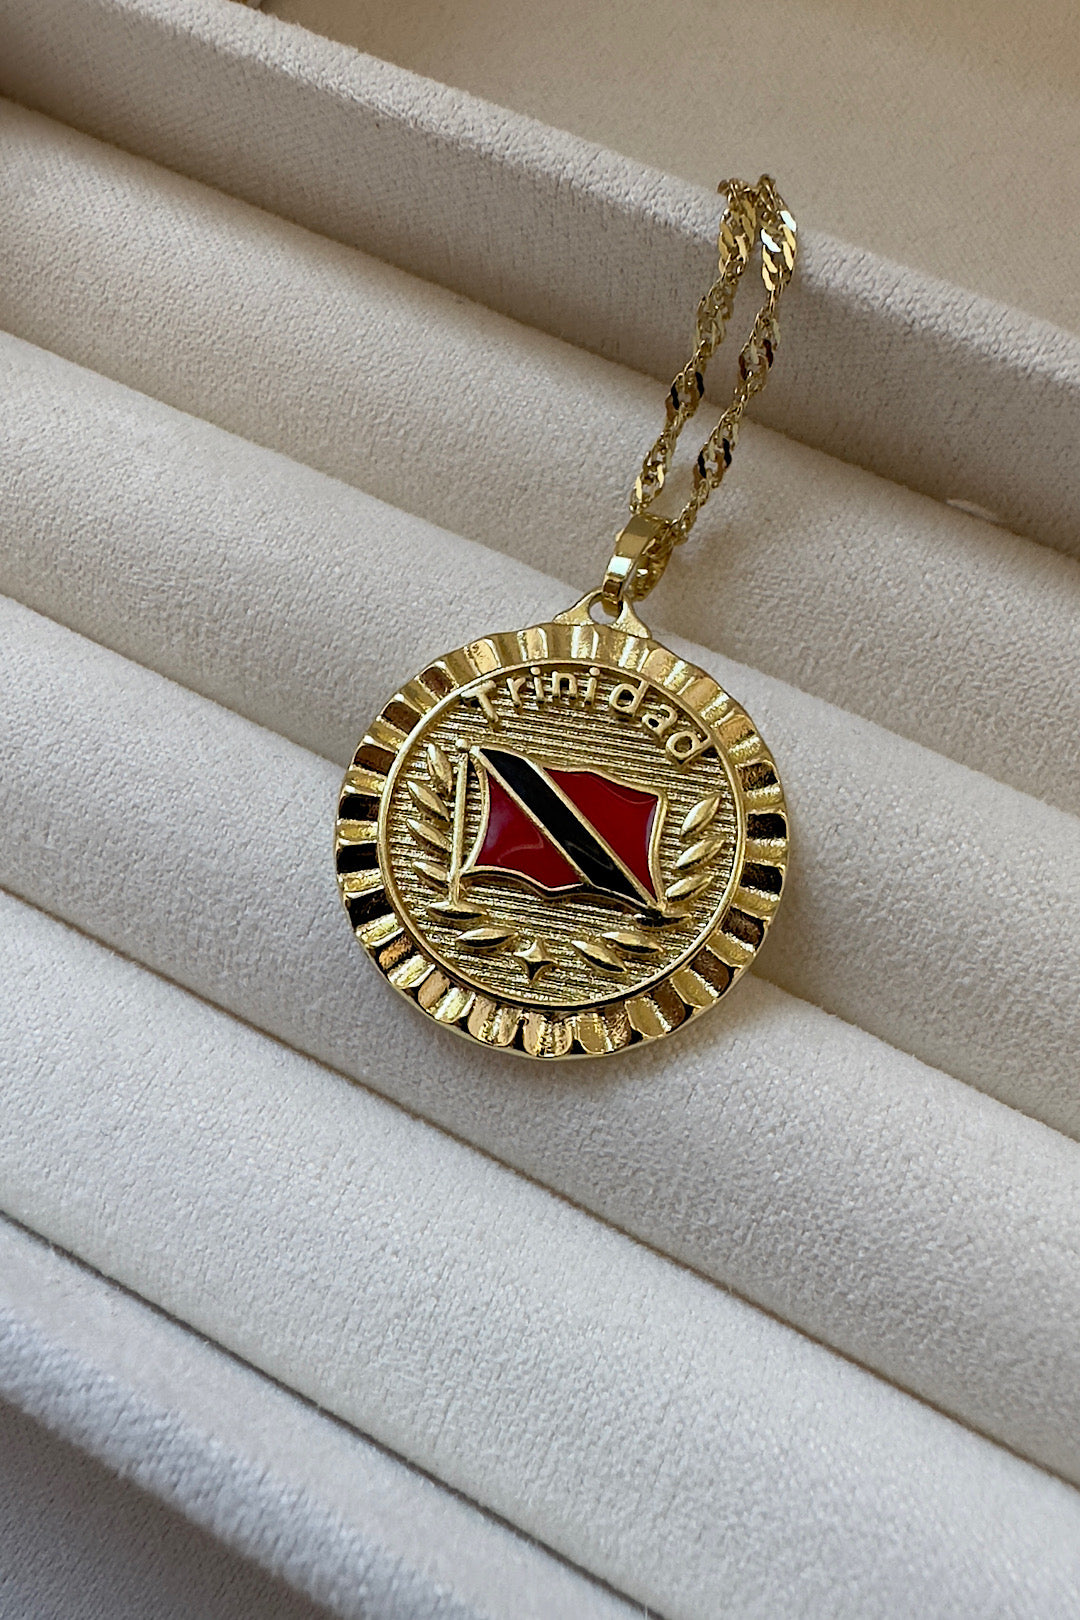 Trinidad Coat of Arms Gold Necklace 